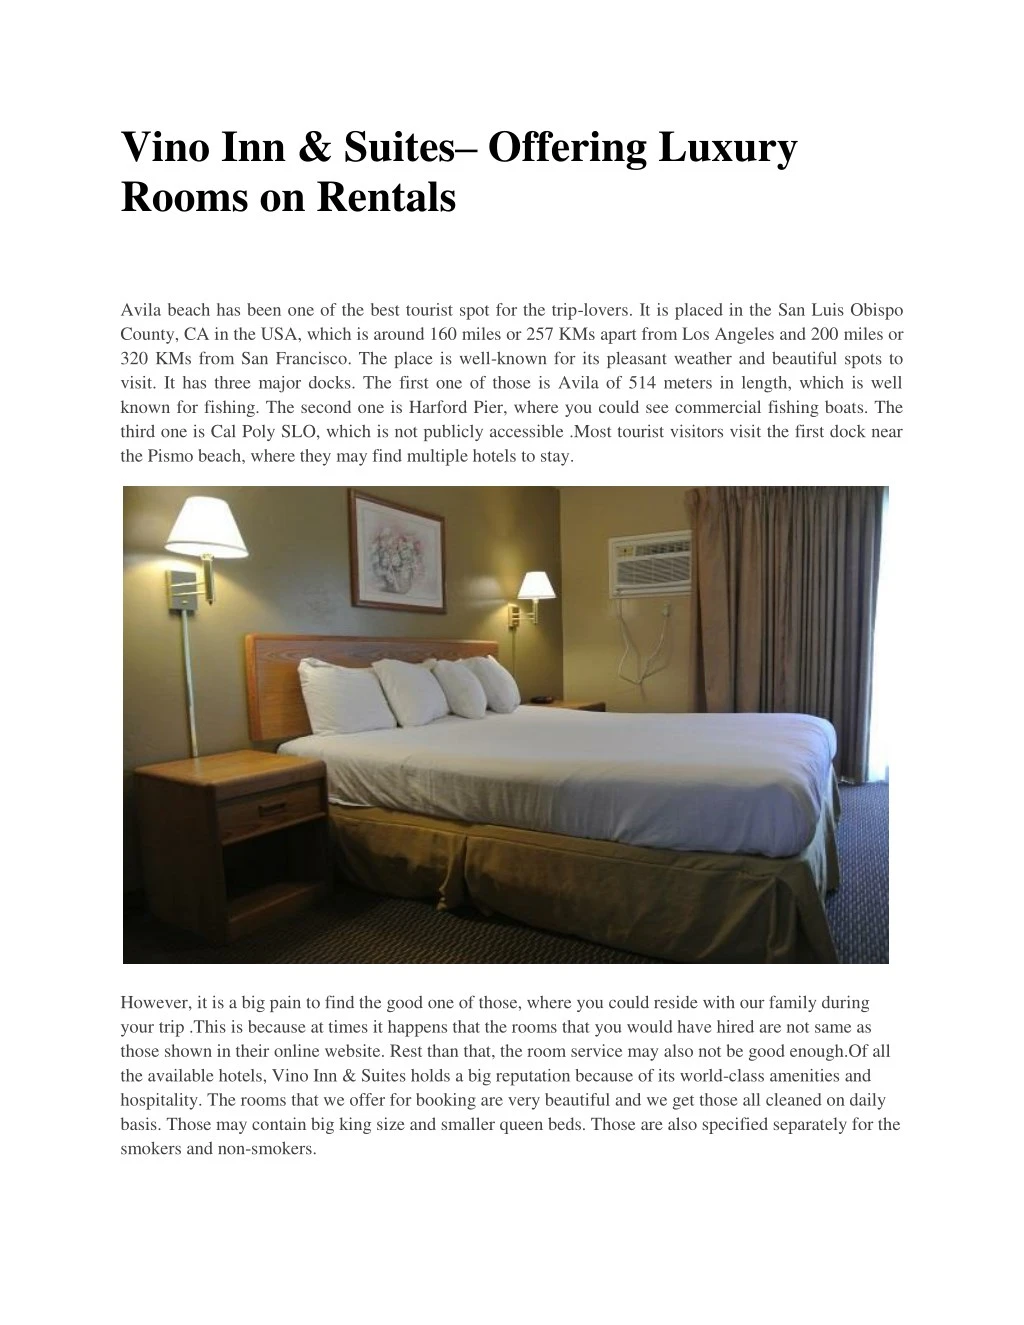 vino inn suites offering luxury rooms on rentals